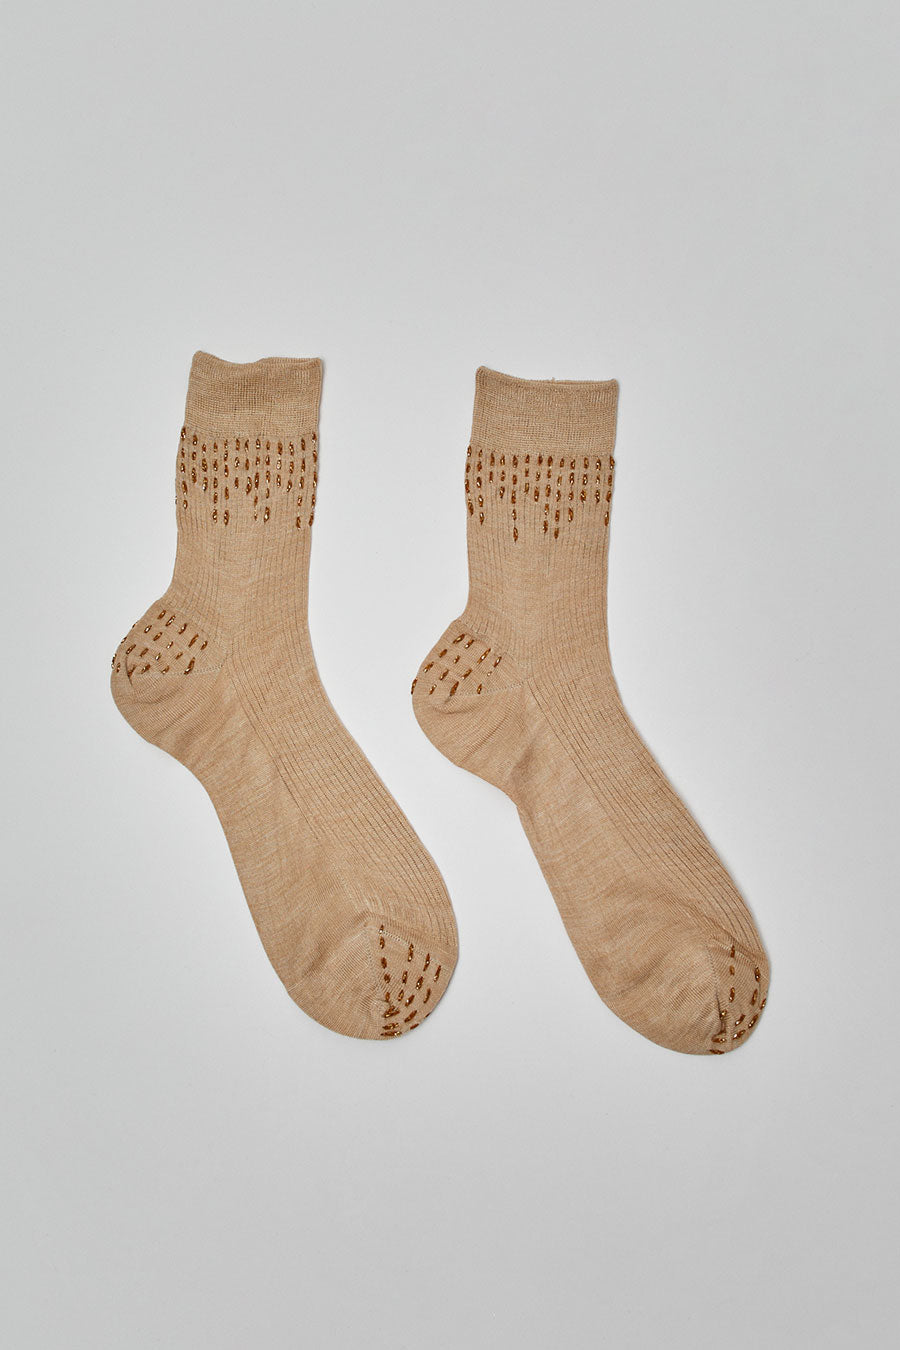 Maria La Rosa Crystal Sheer Socks in Sand